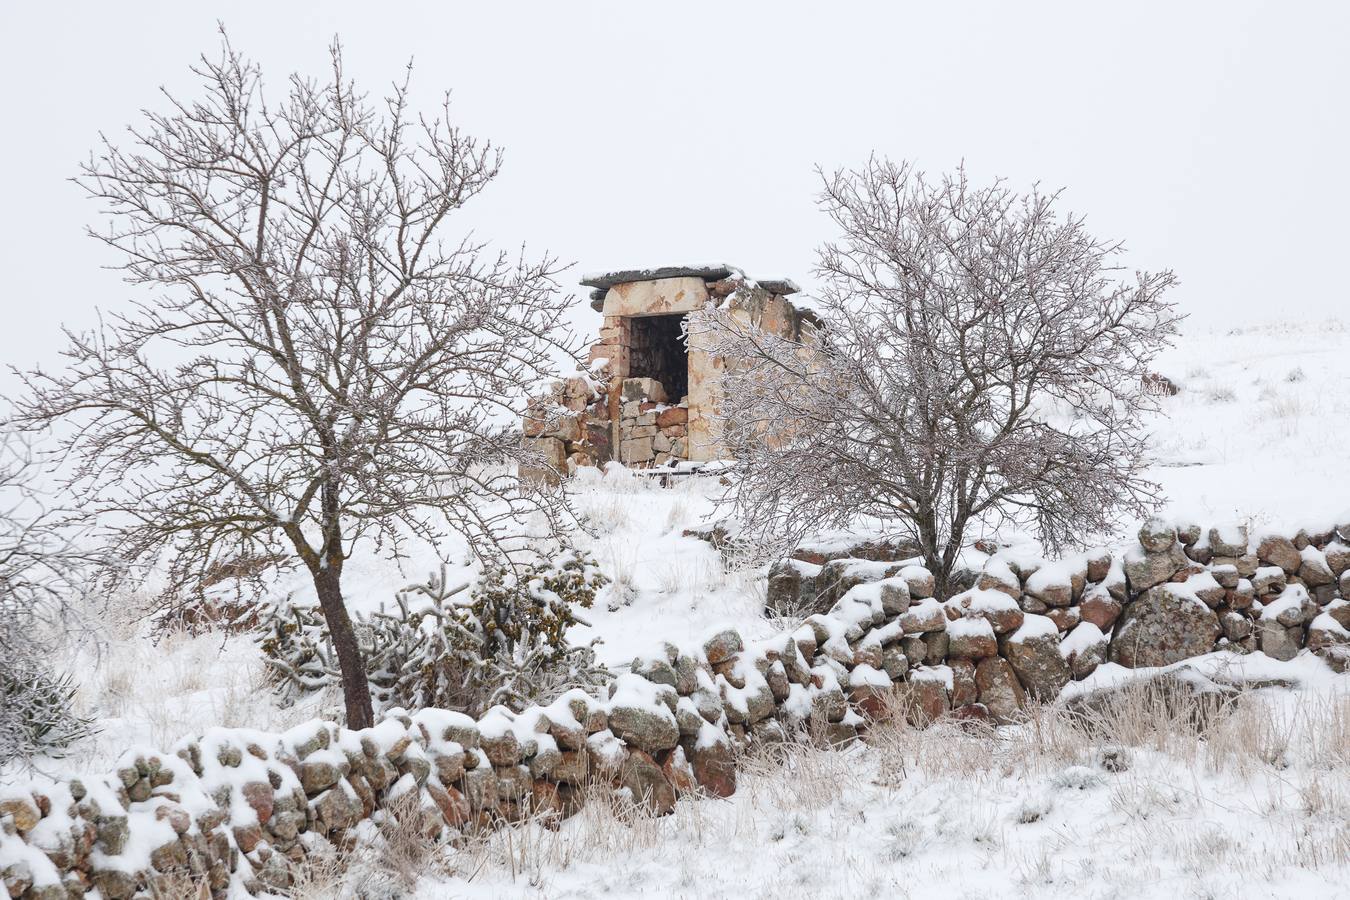 Temporal de nieve y hielo en Tardobispo, en la provincia de Zamora.